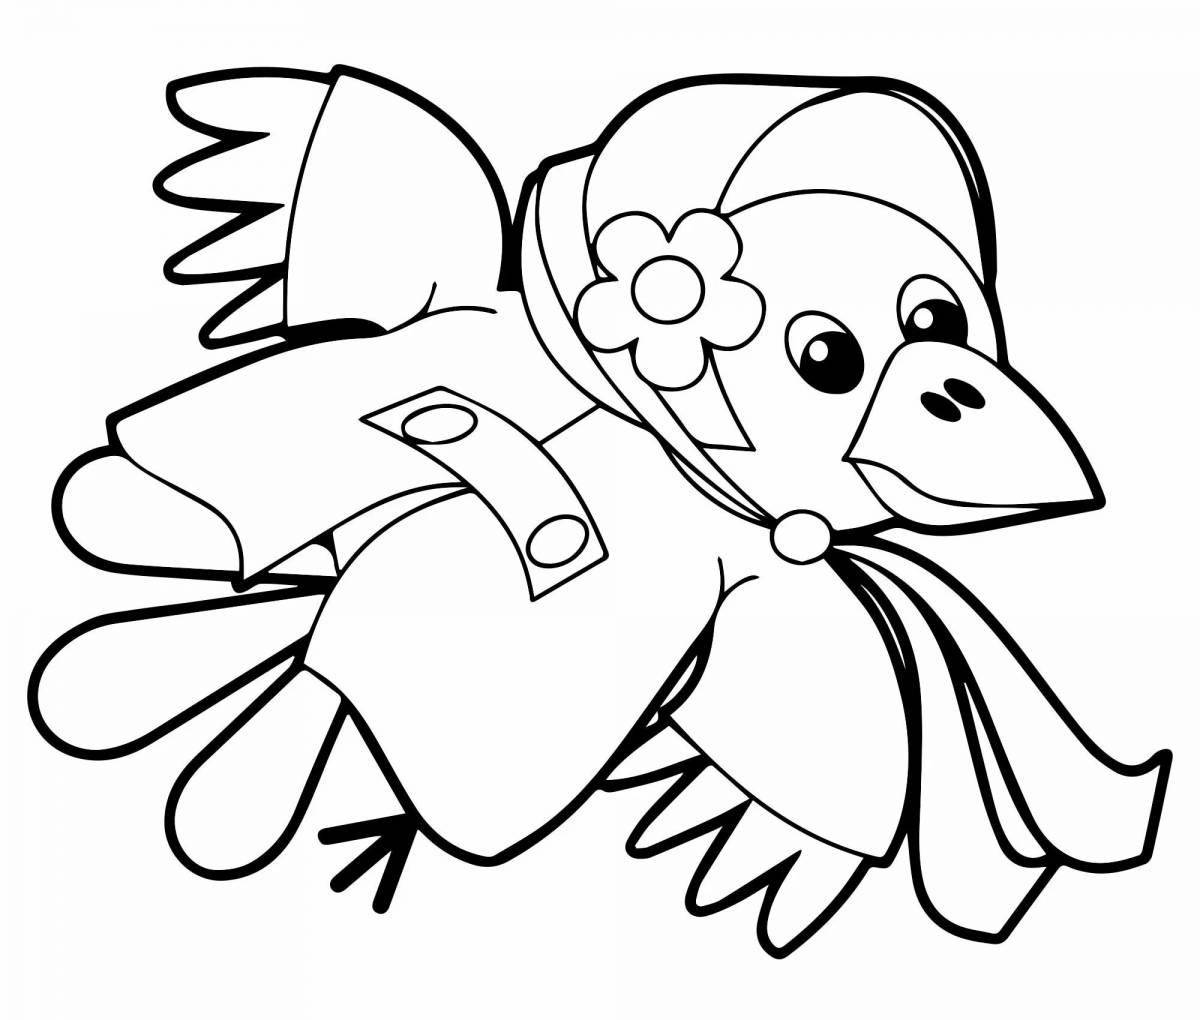 Fun bird coloring for preschoolers